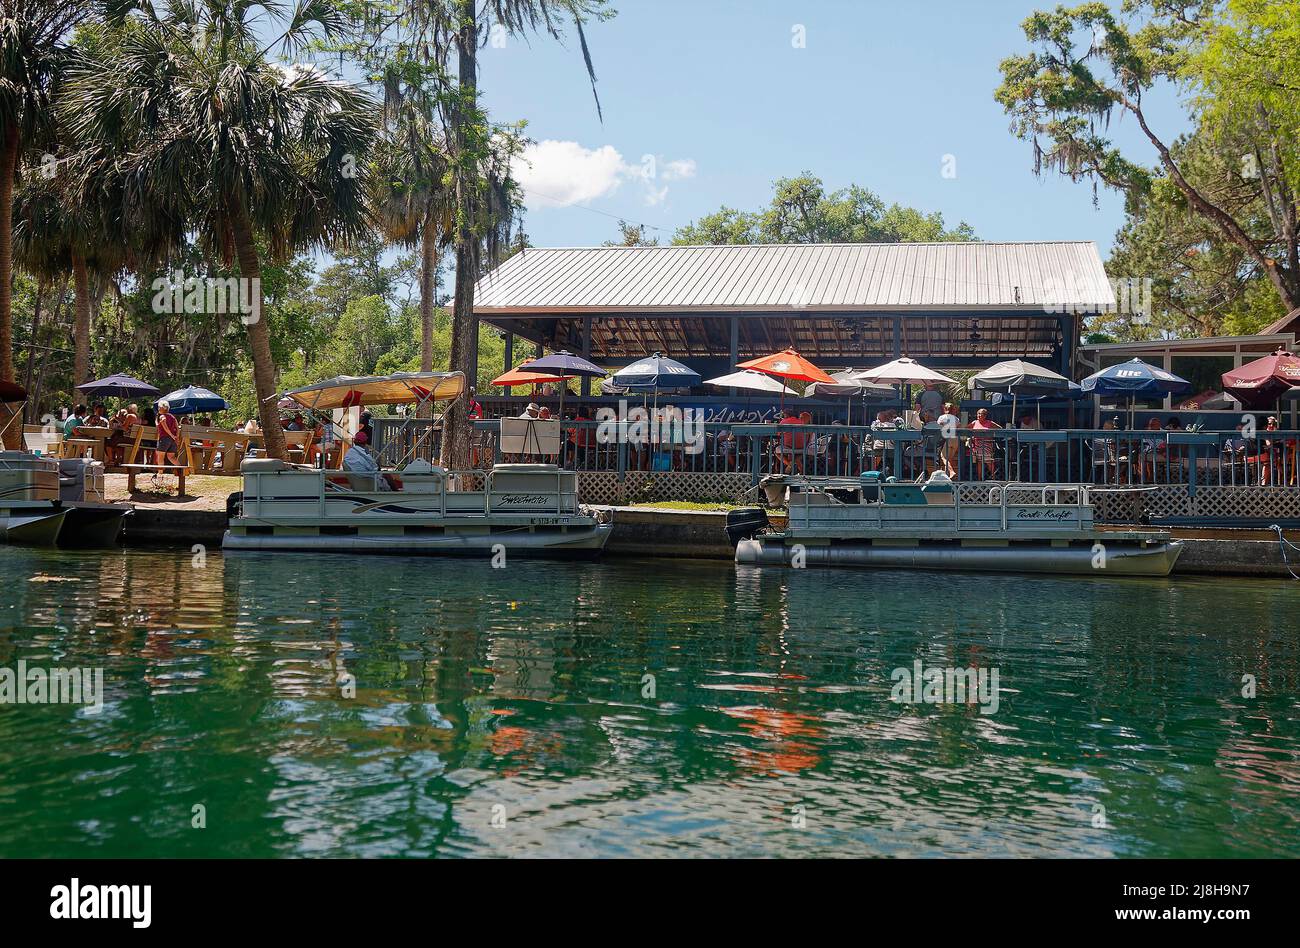 riverside restaurant, outdoor eating, pontoon boats docked, umbrellas, people, recreation, water, Rainbow River, Florida, Dunnellon, FL Stock Photo